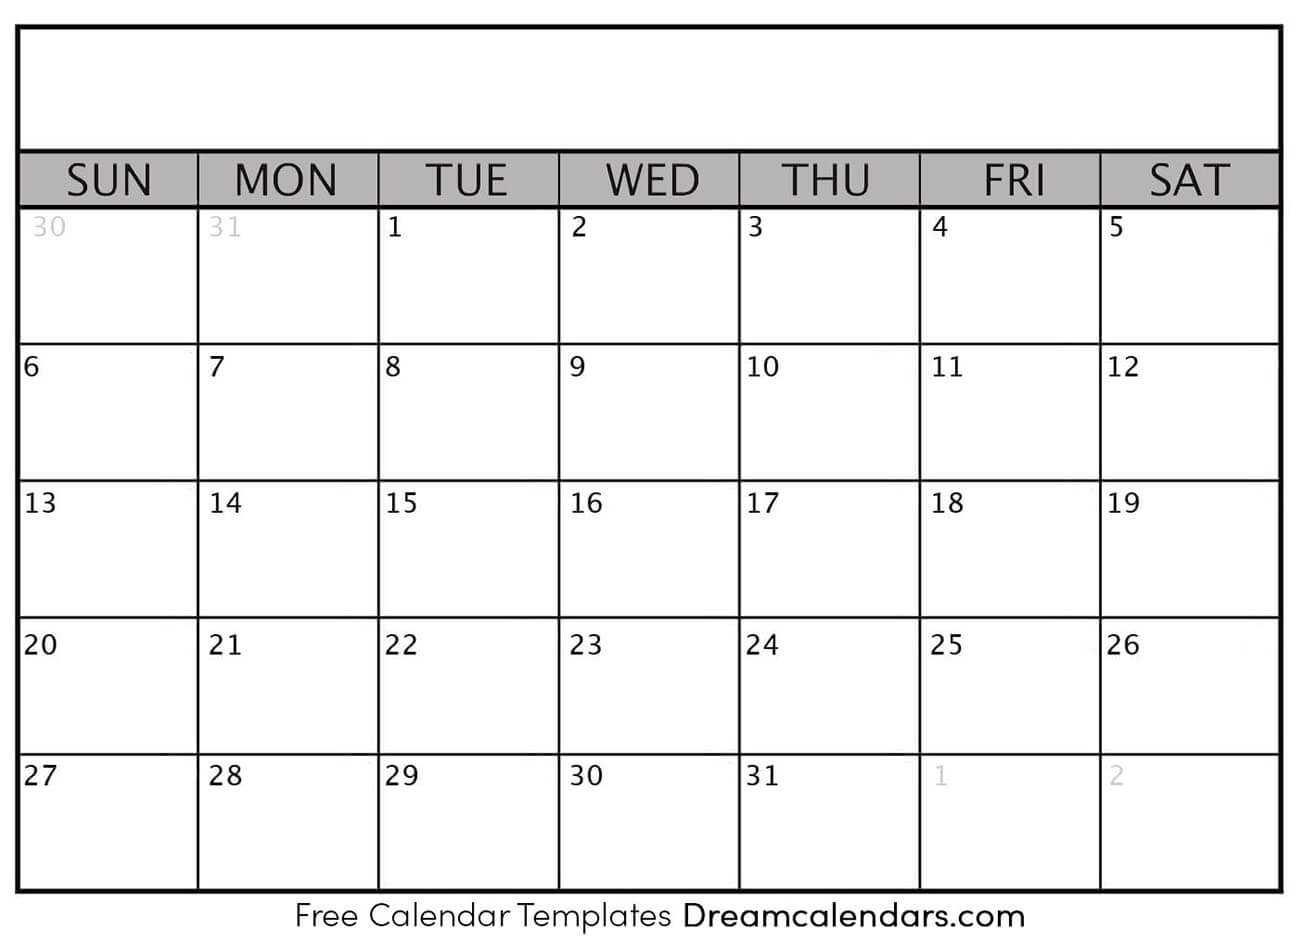 Printable Blank Calendar 2020 | Dream Calendars Inside Blank Calender Template